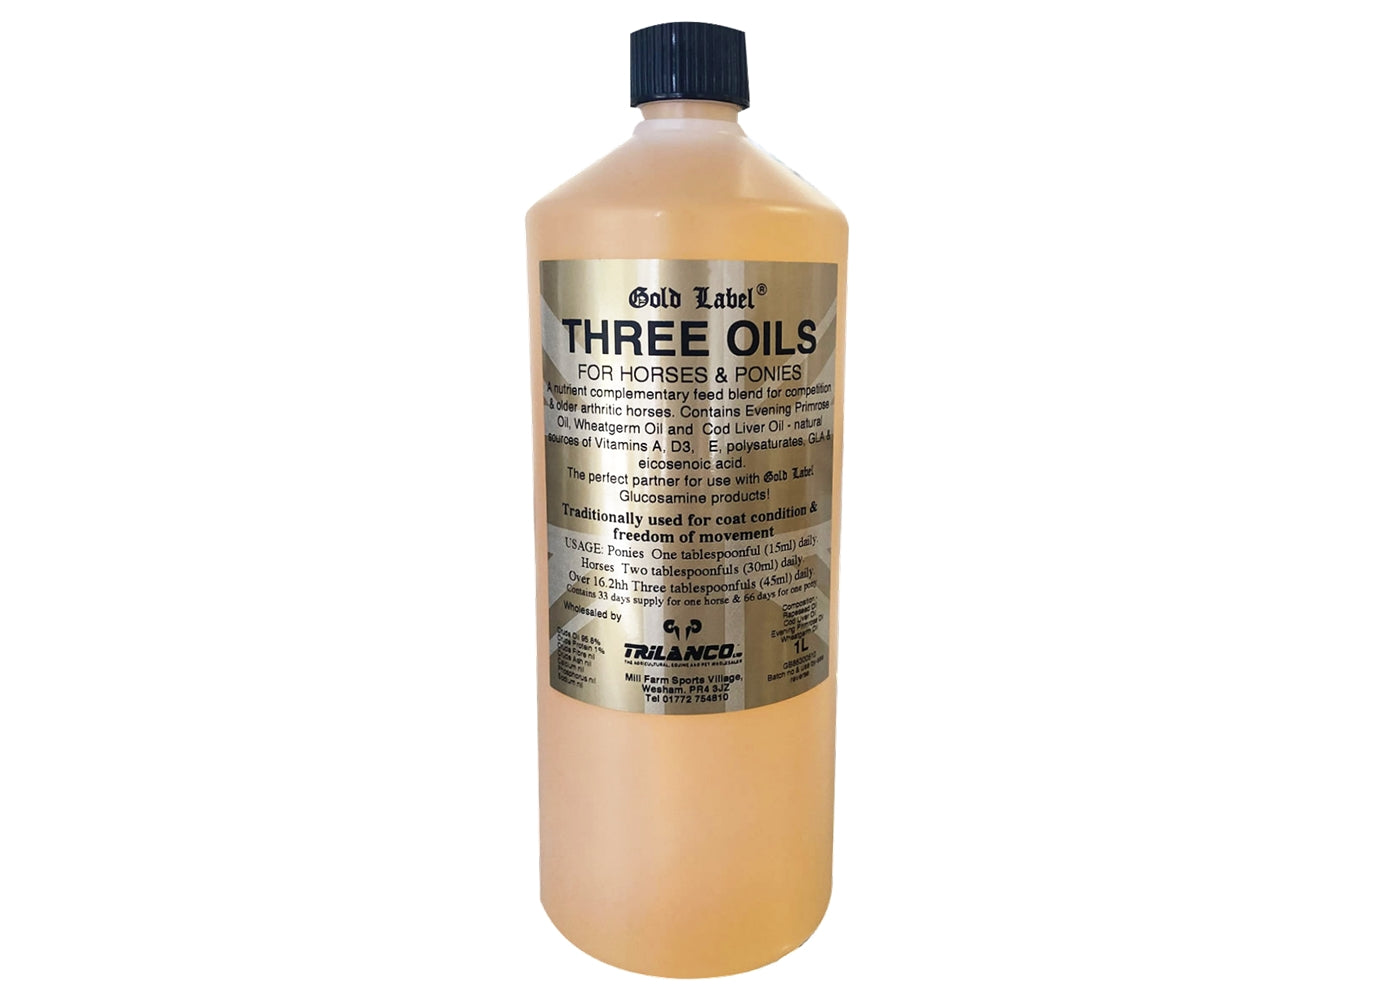 Gold Label Three Oils | Horse Care Supplement - Buy Online SPR Centre UK